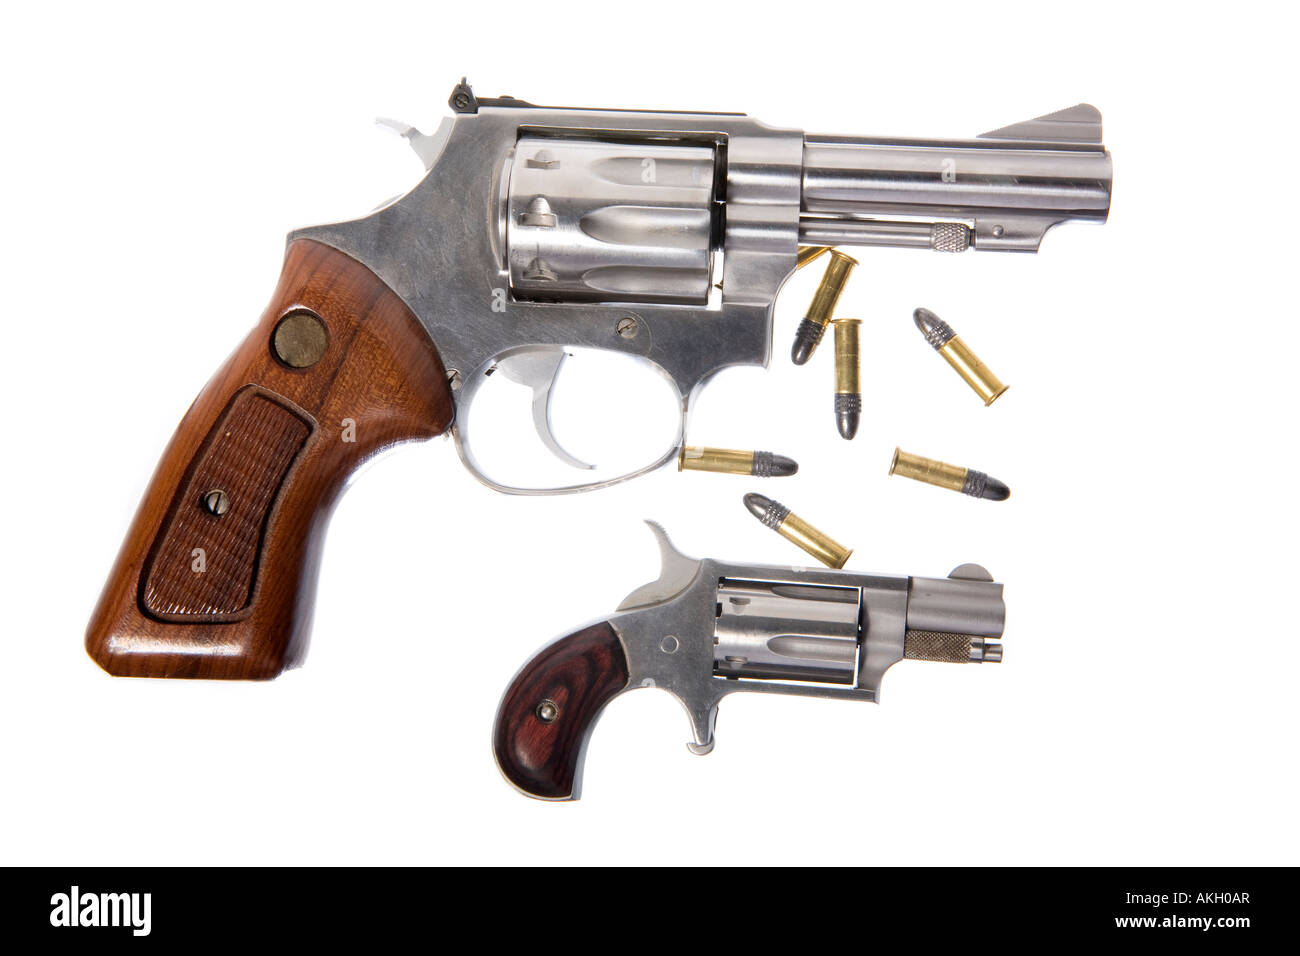 Big 22 caliber hand gun and small 22 caliber hand gun isolated on white background Stock Photo